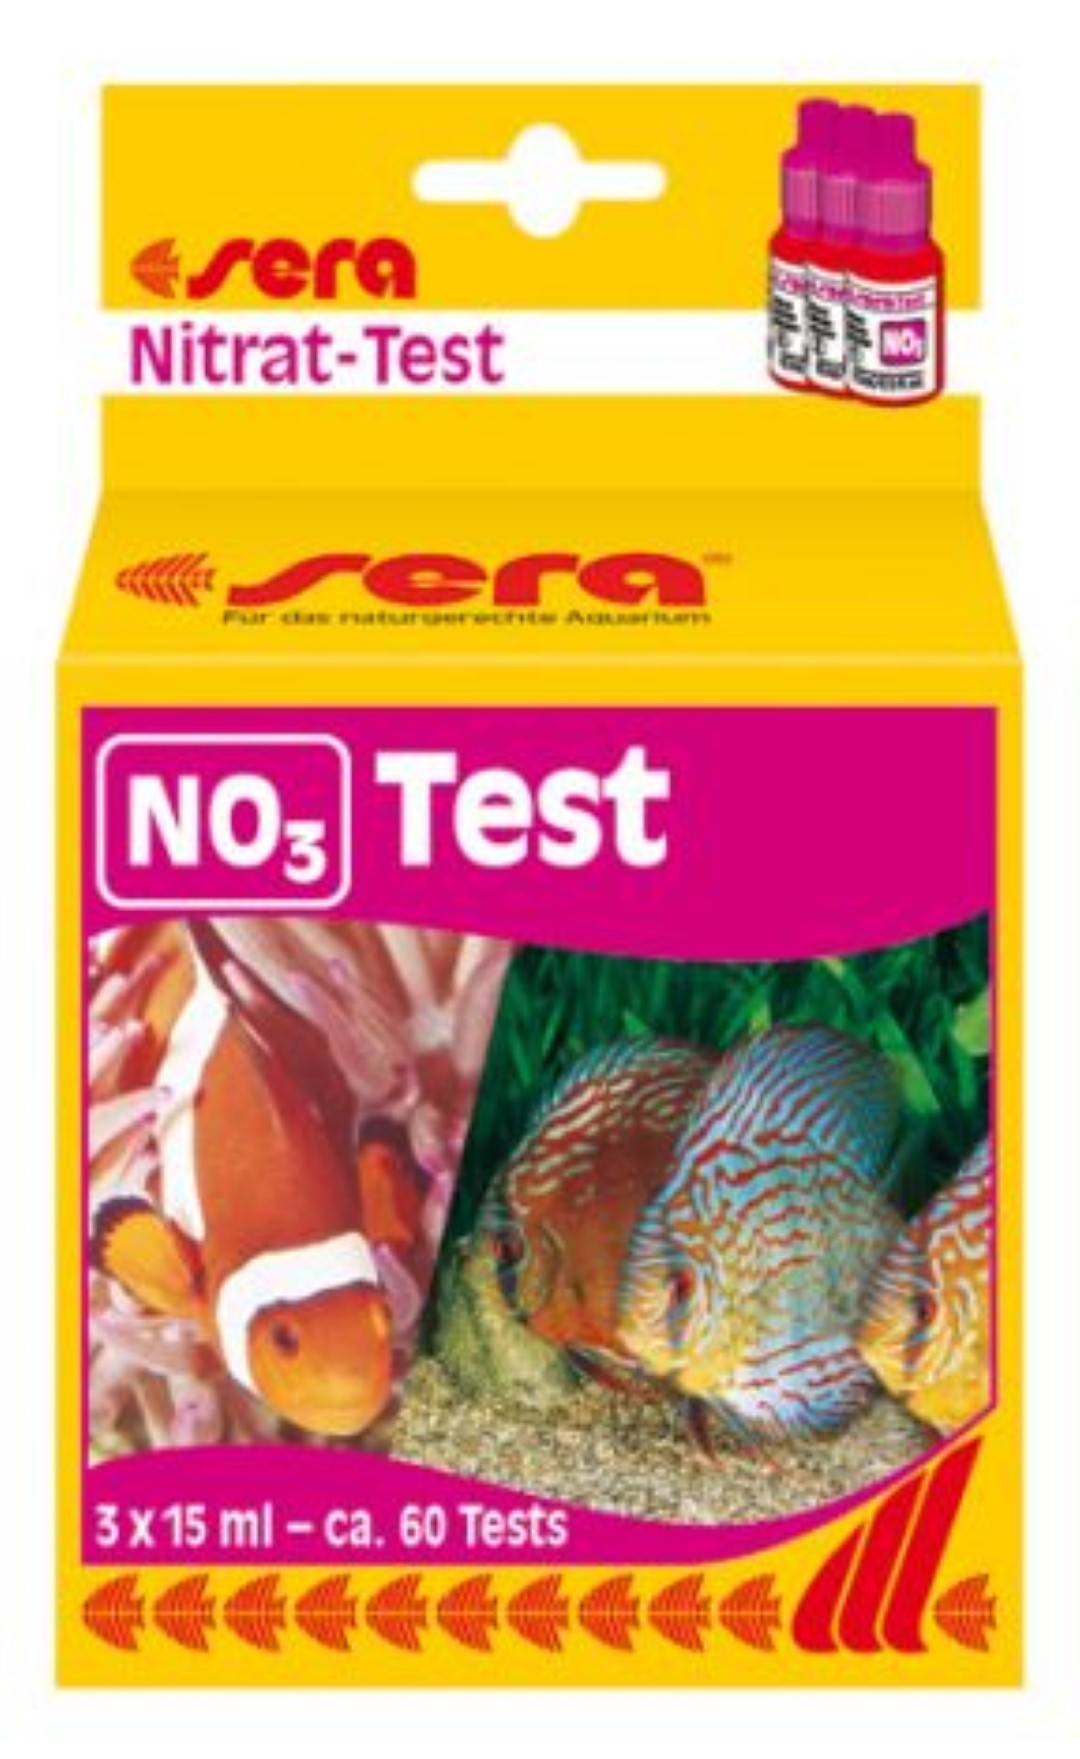 Nitraat-test